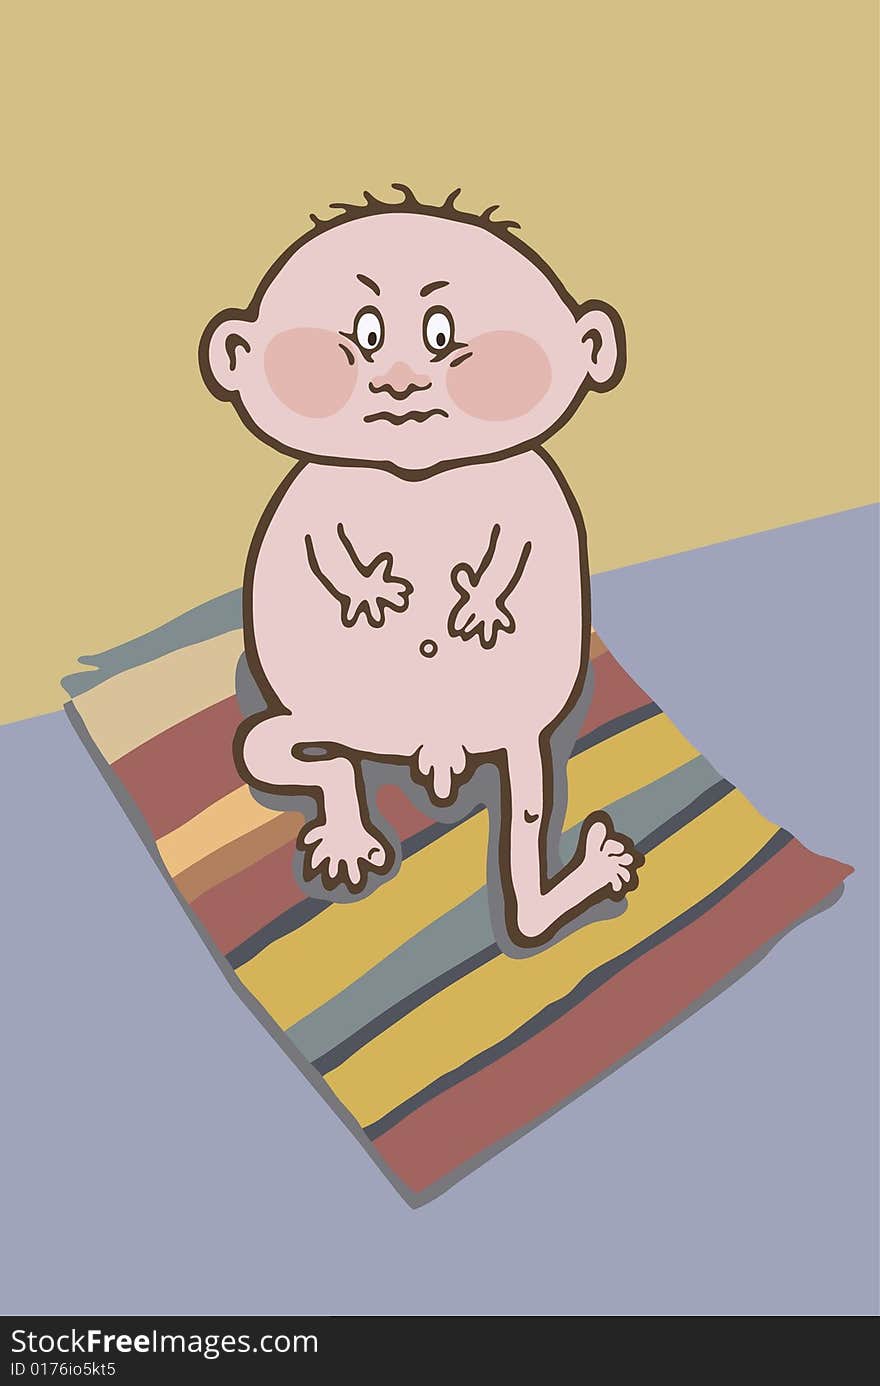 Sadness baby sit on mat